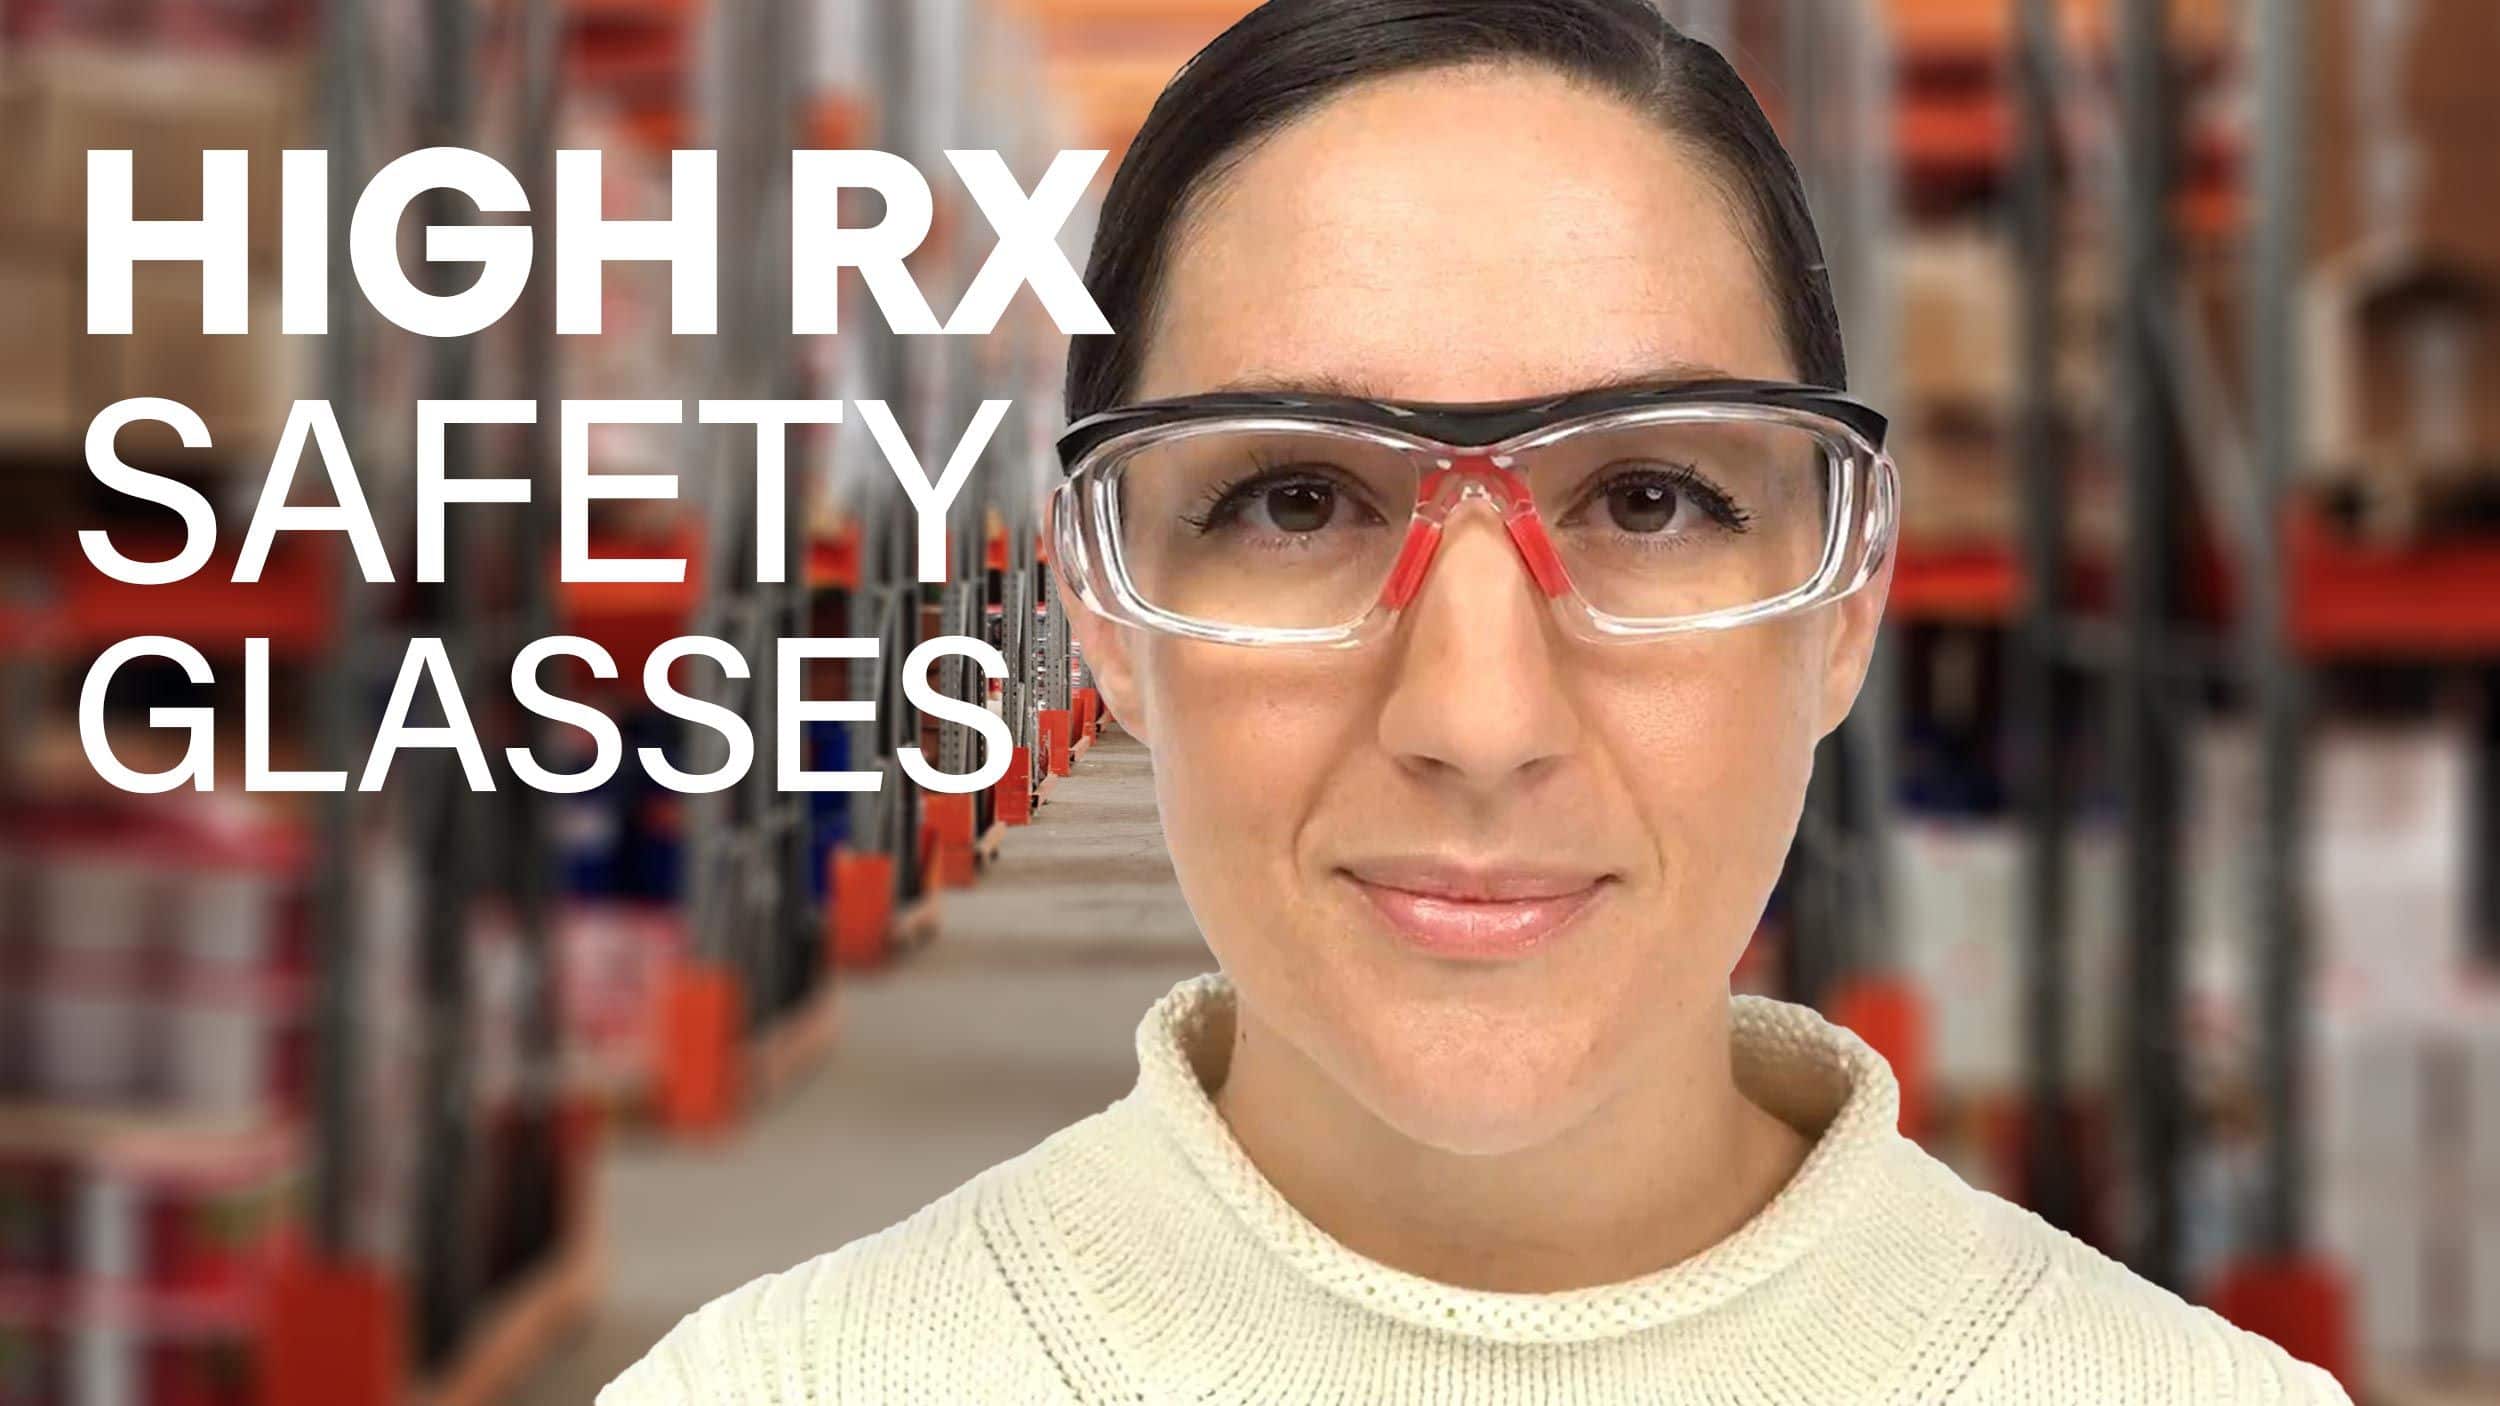 High RX Safety Glasses Header